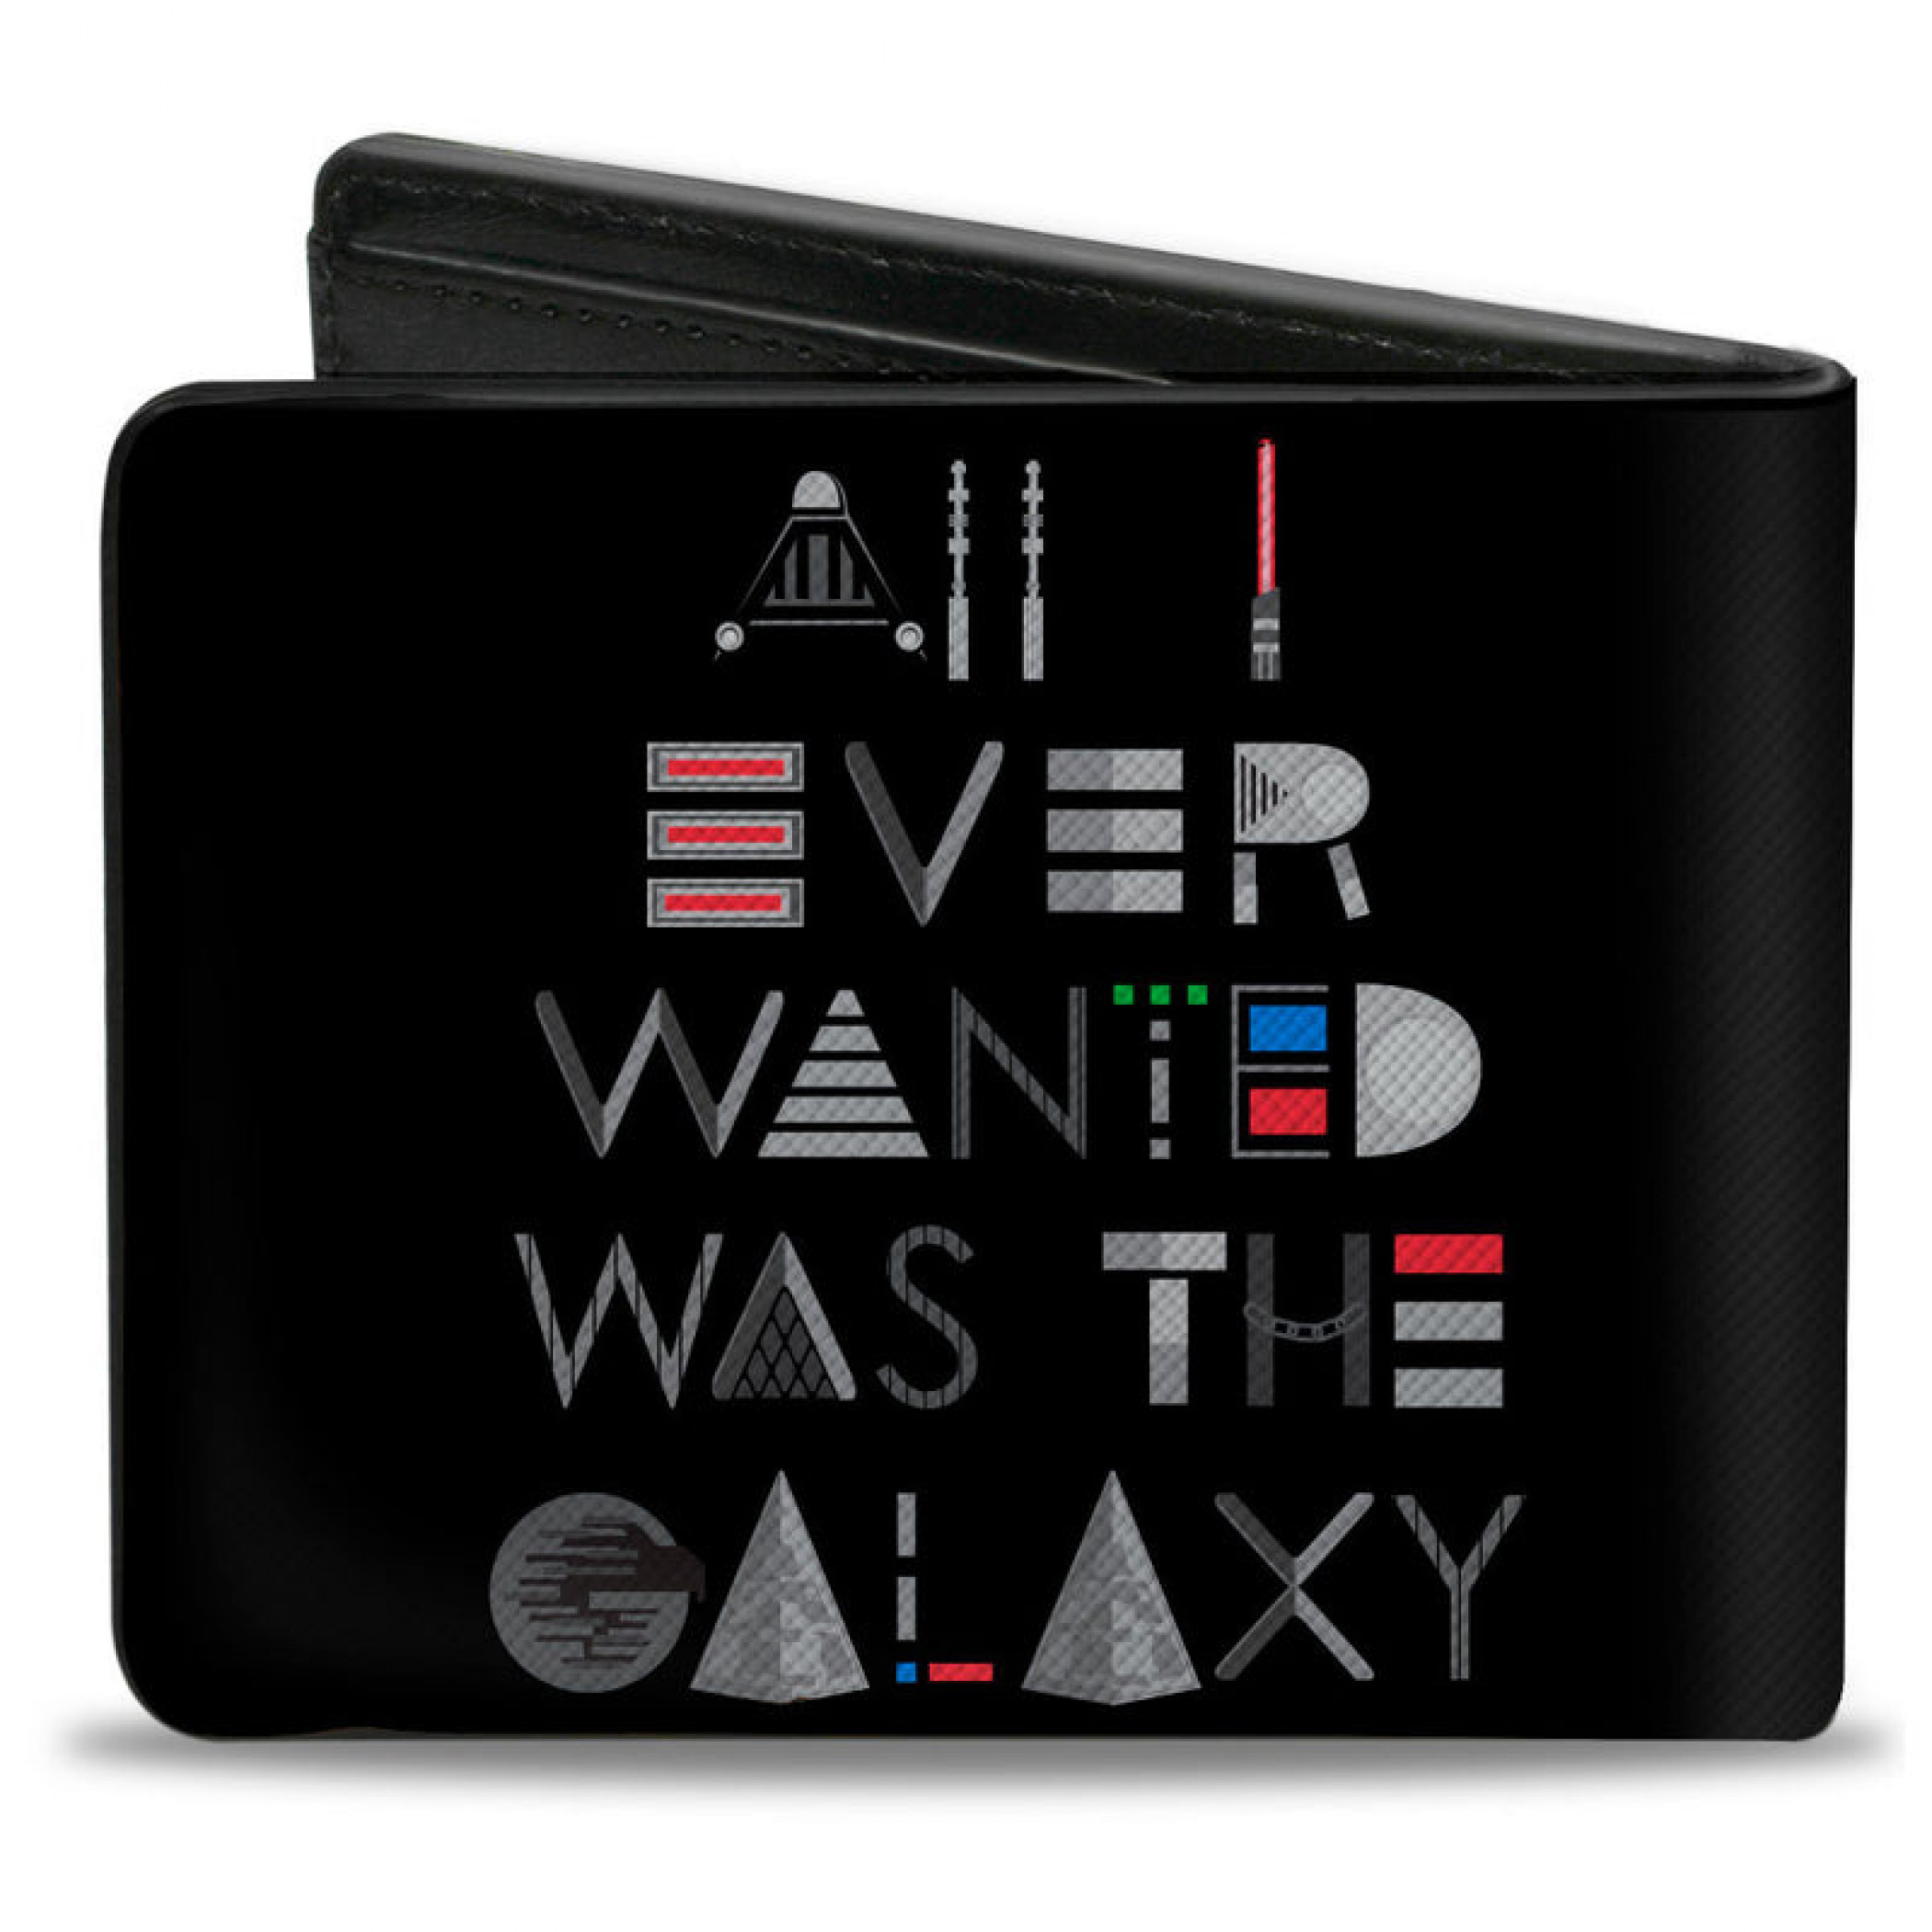 Star Wars Darth Vader All I Ever Wanted Was the Galaxy Bi-Fold Wallet